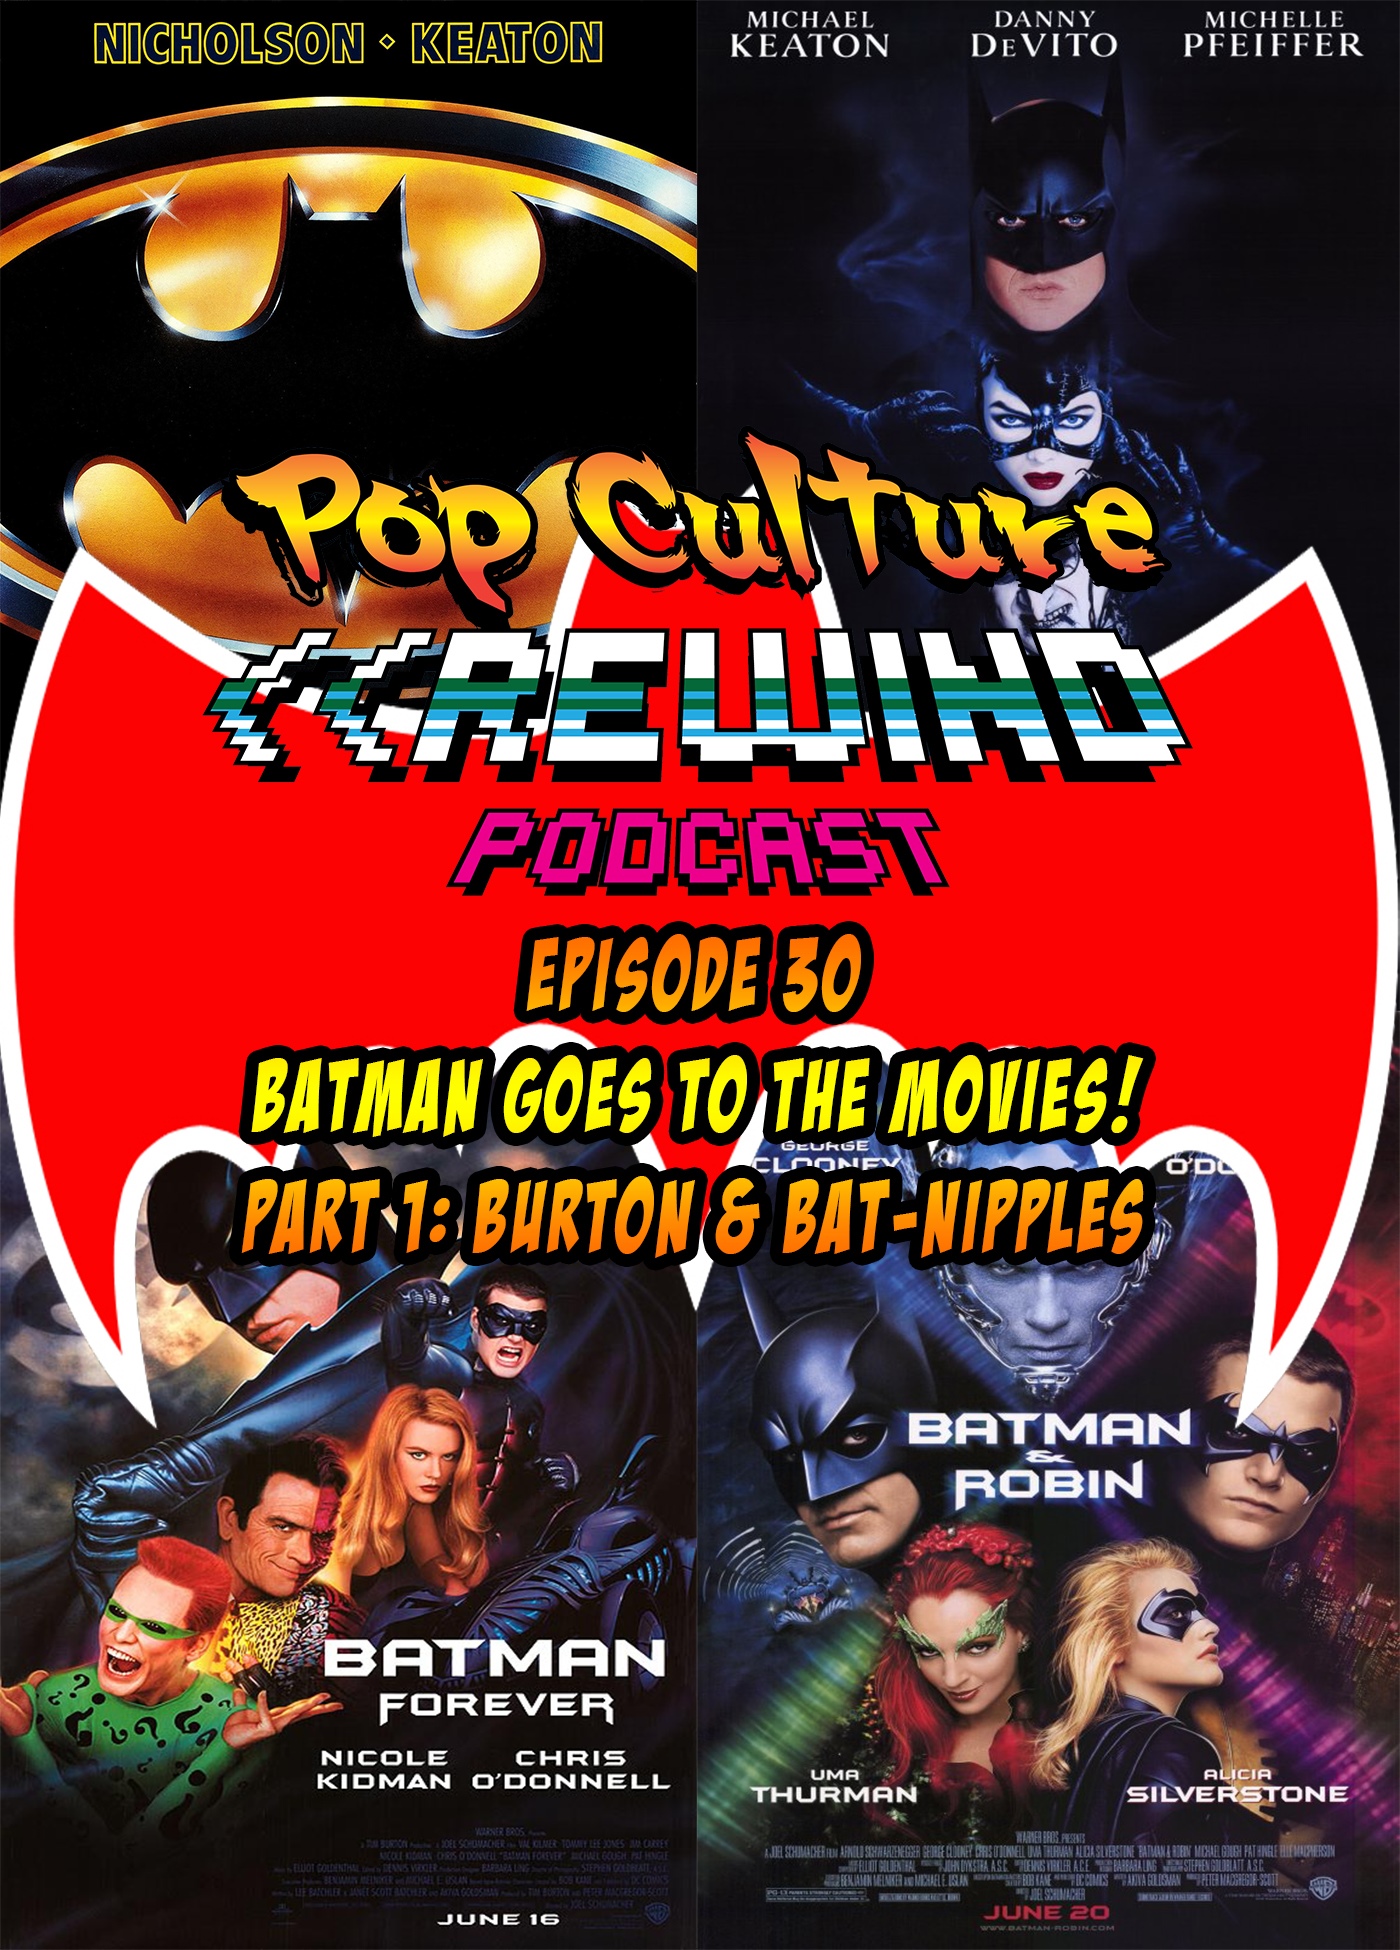 PCR #30 - Batman Goes to the Movies, Part 1: Burton & Bat-Nipples